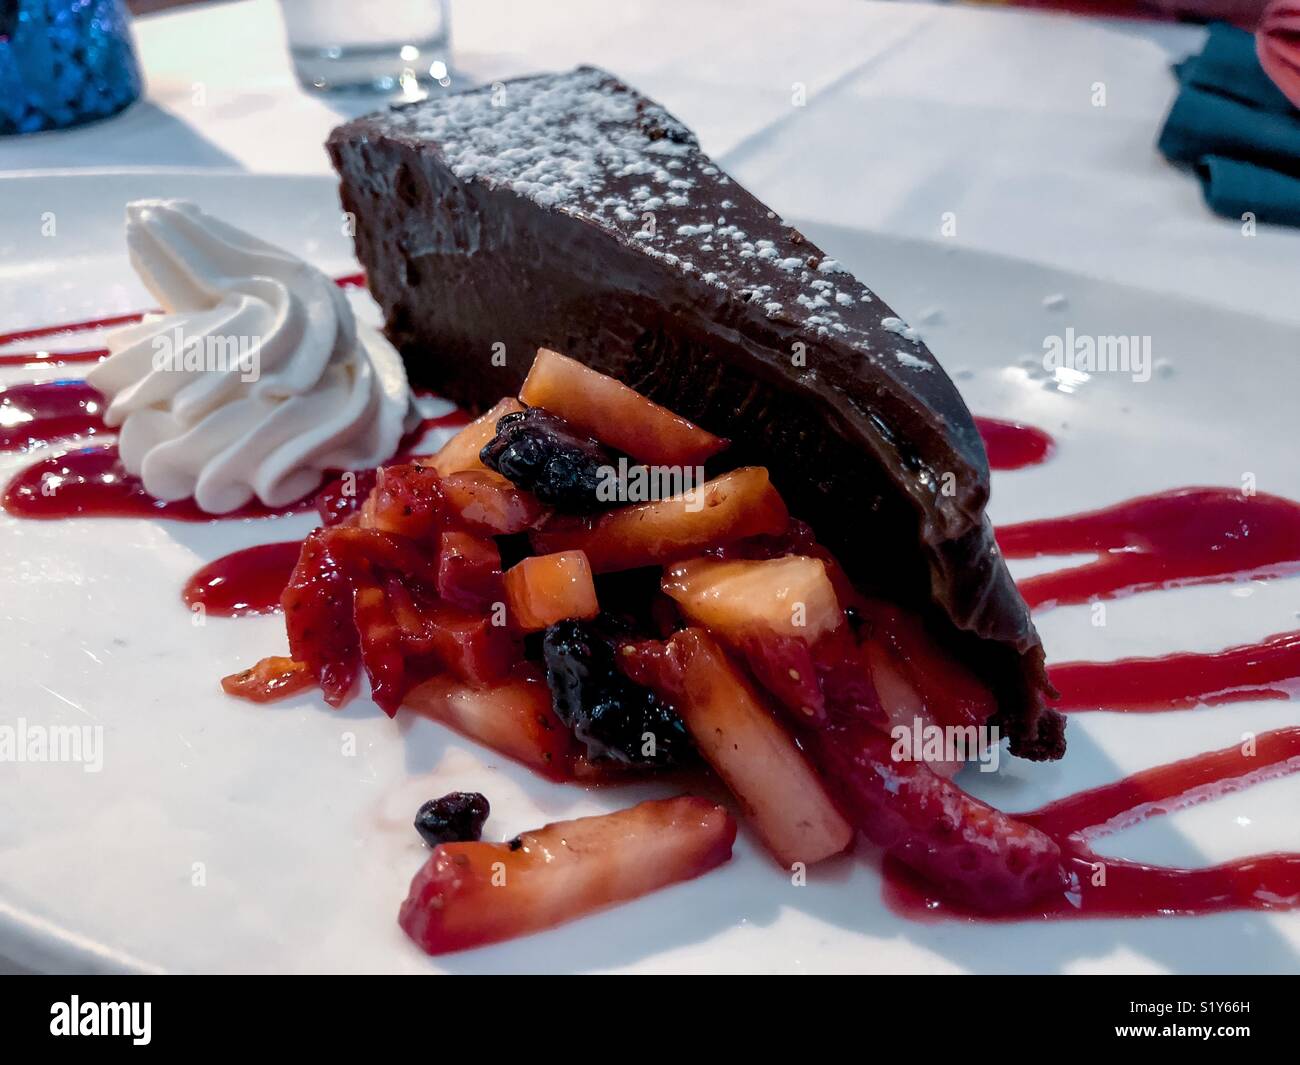 Chocolate tart with raspberry sauce and mixed berries. Stock Photo